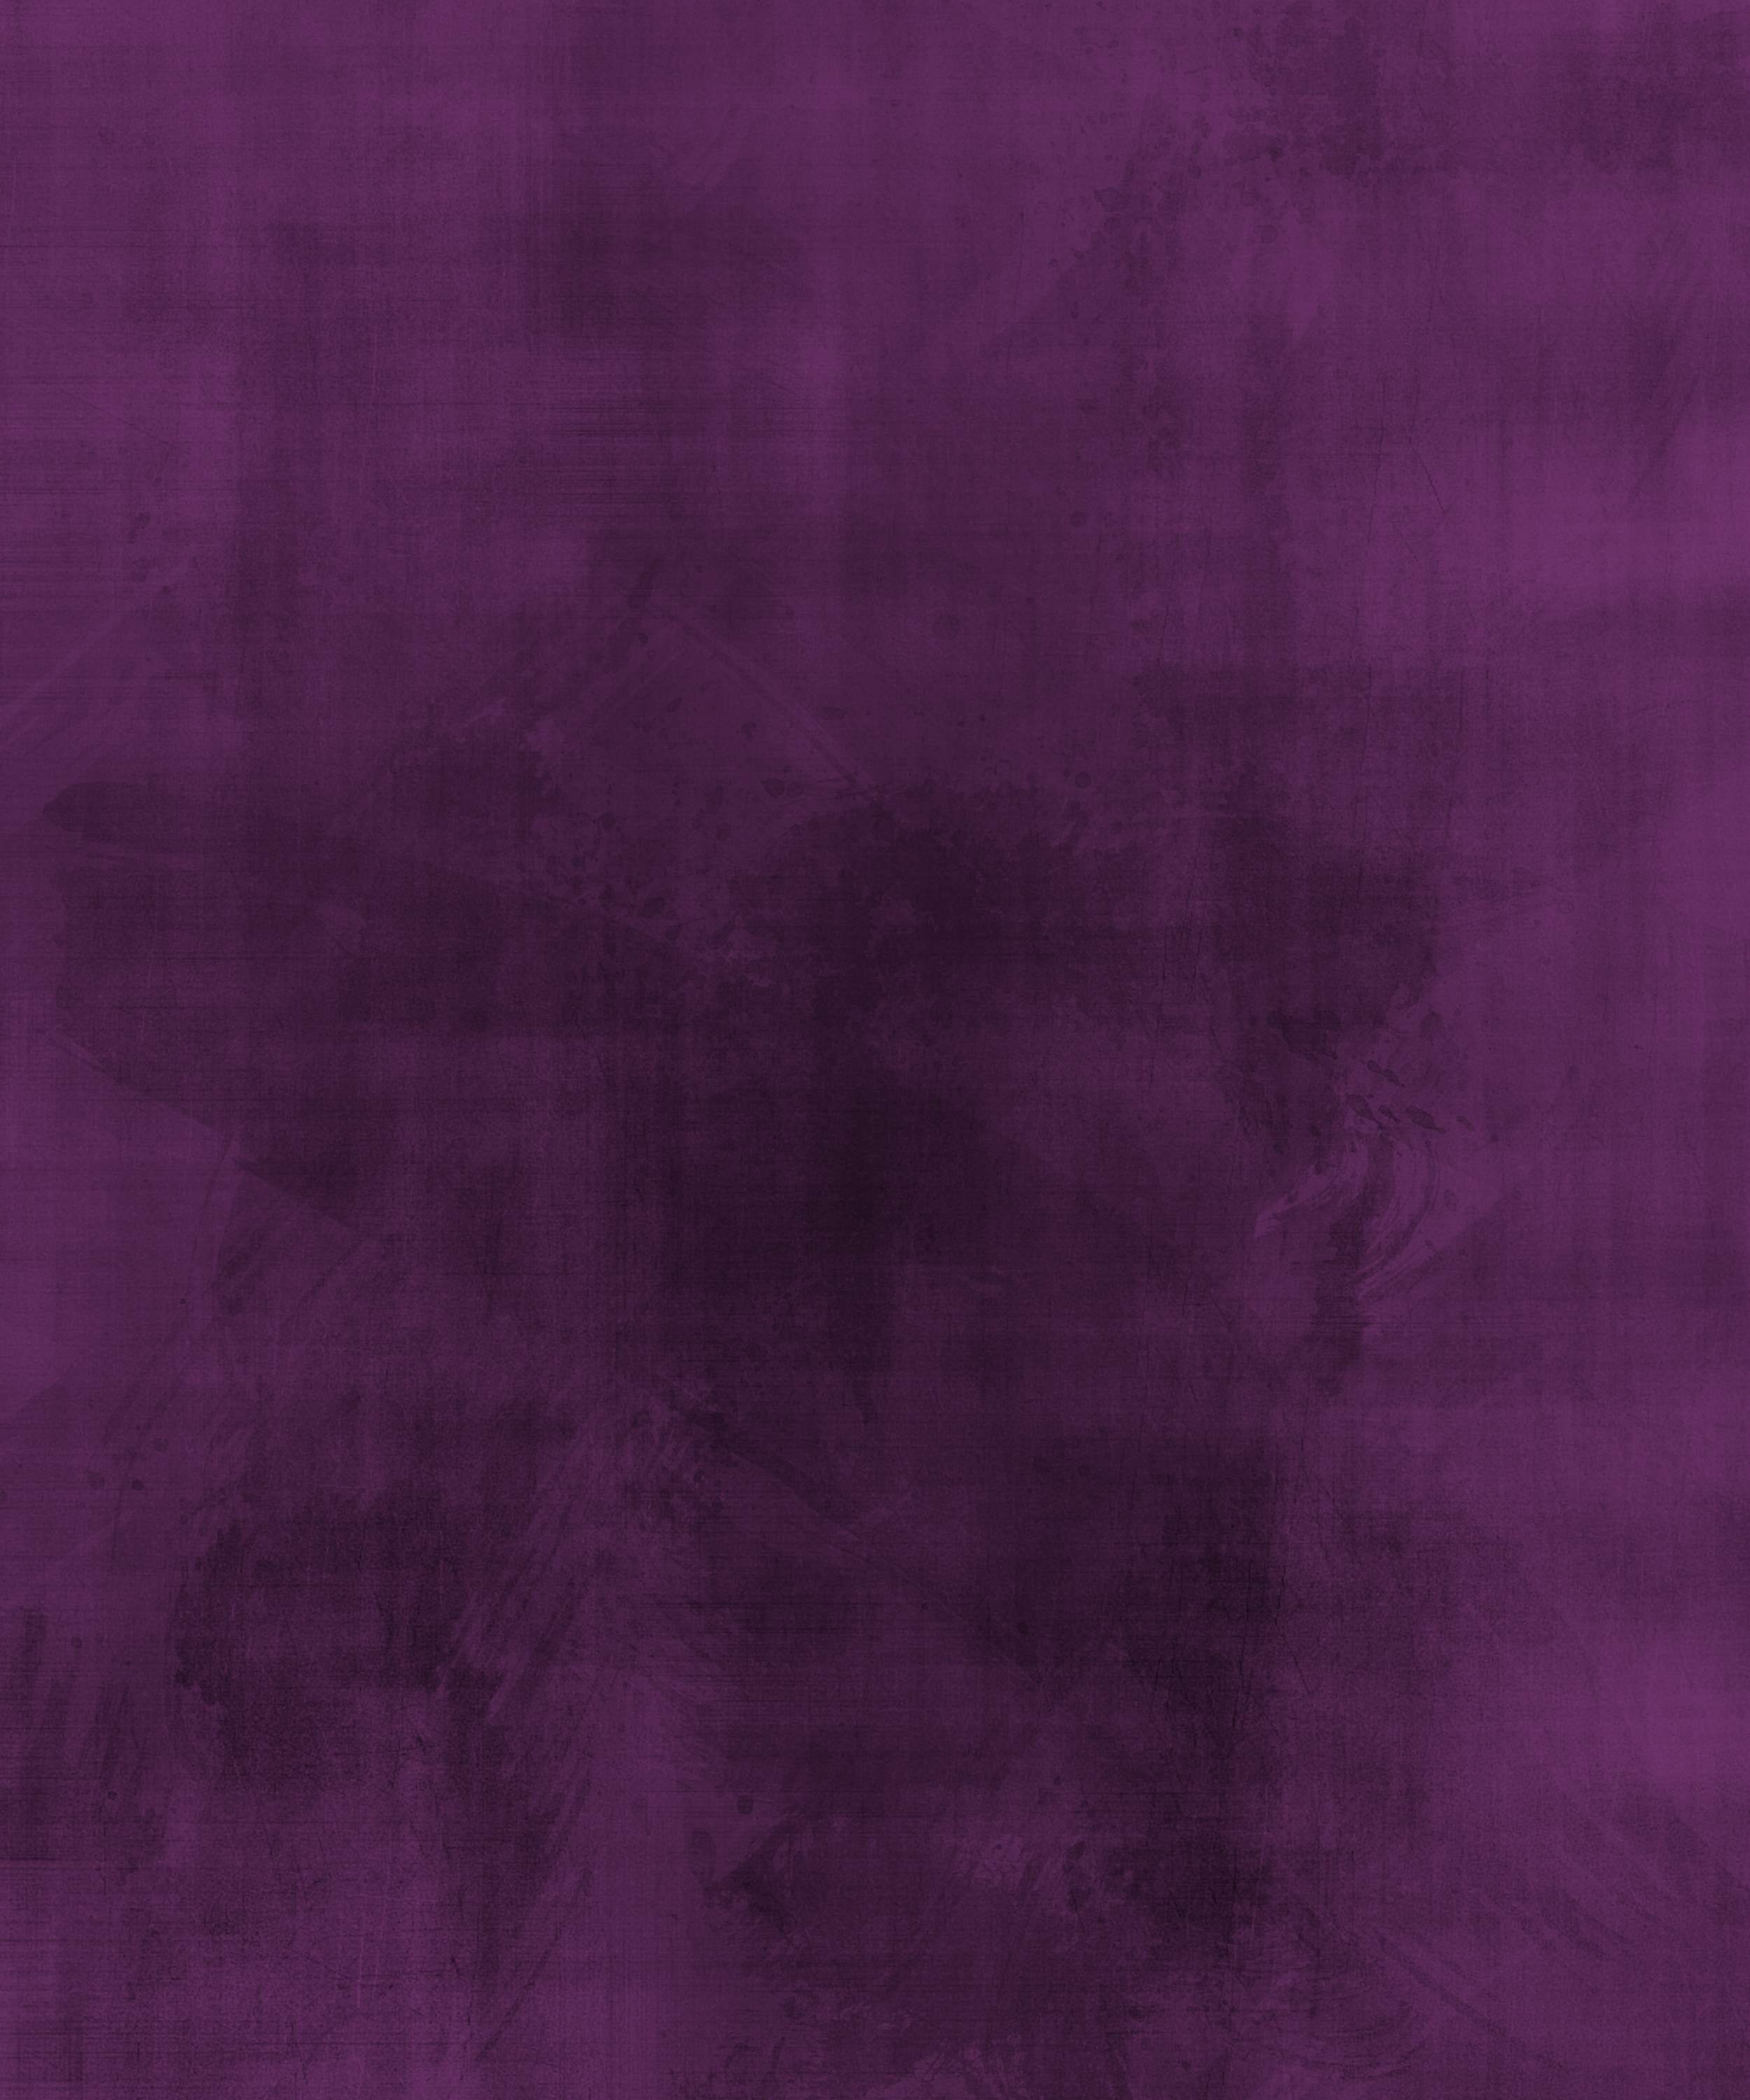 Purple grunge texture background image, free download